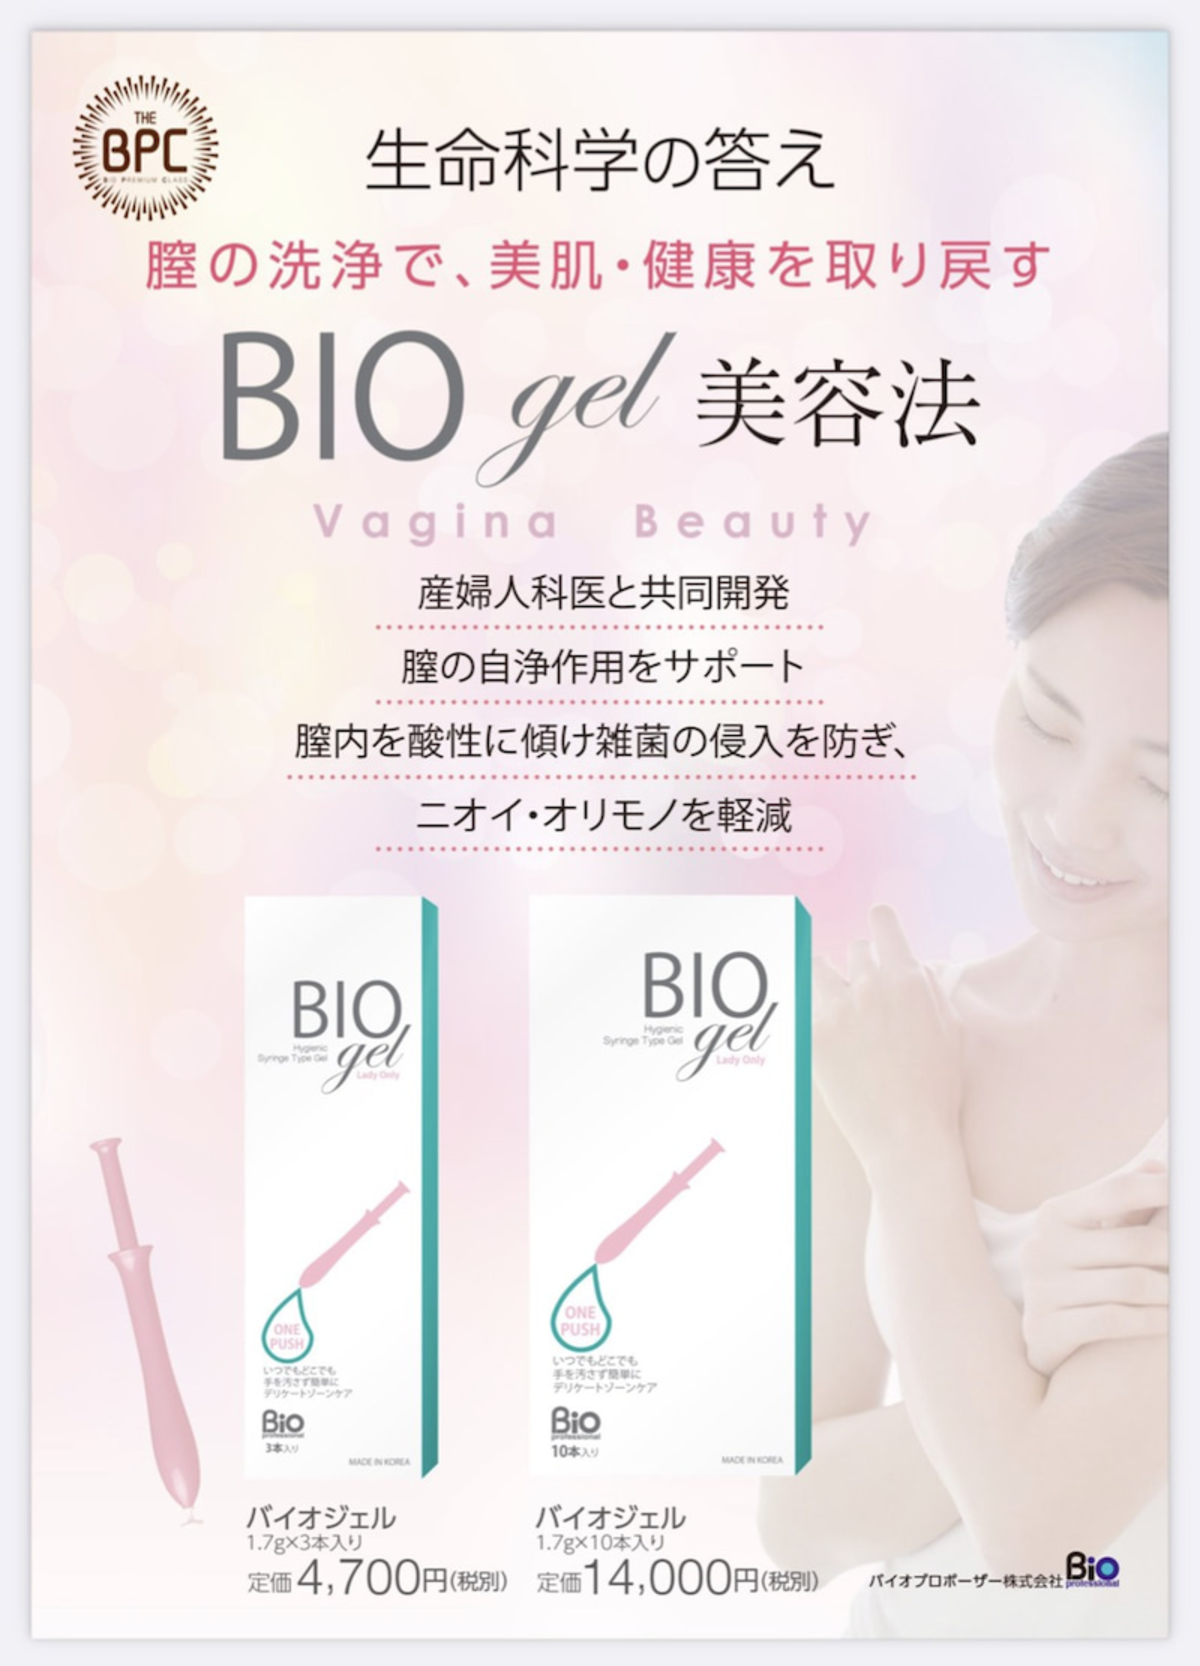 BPC バイオジェル1.7g | 広島初、美髪と内面美容を特化したサロン 